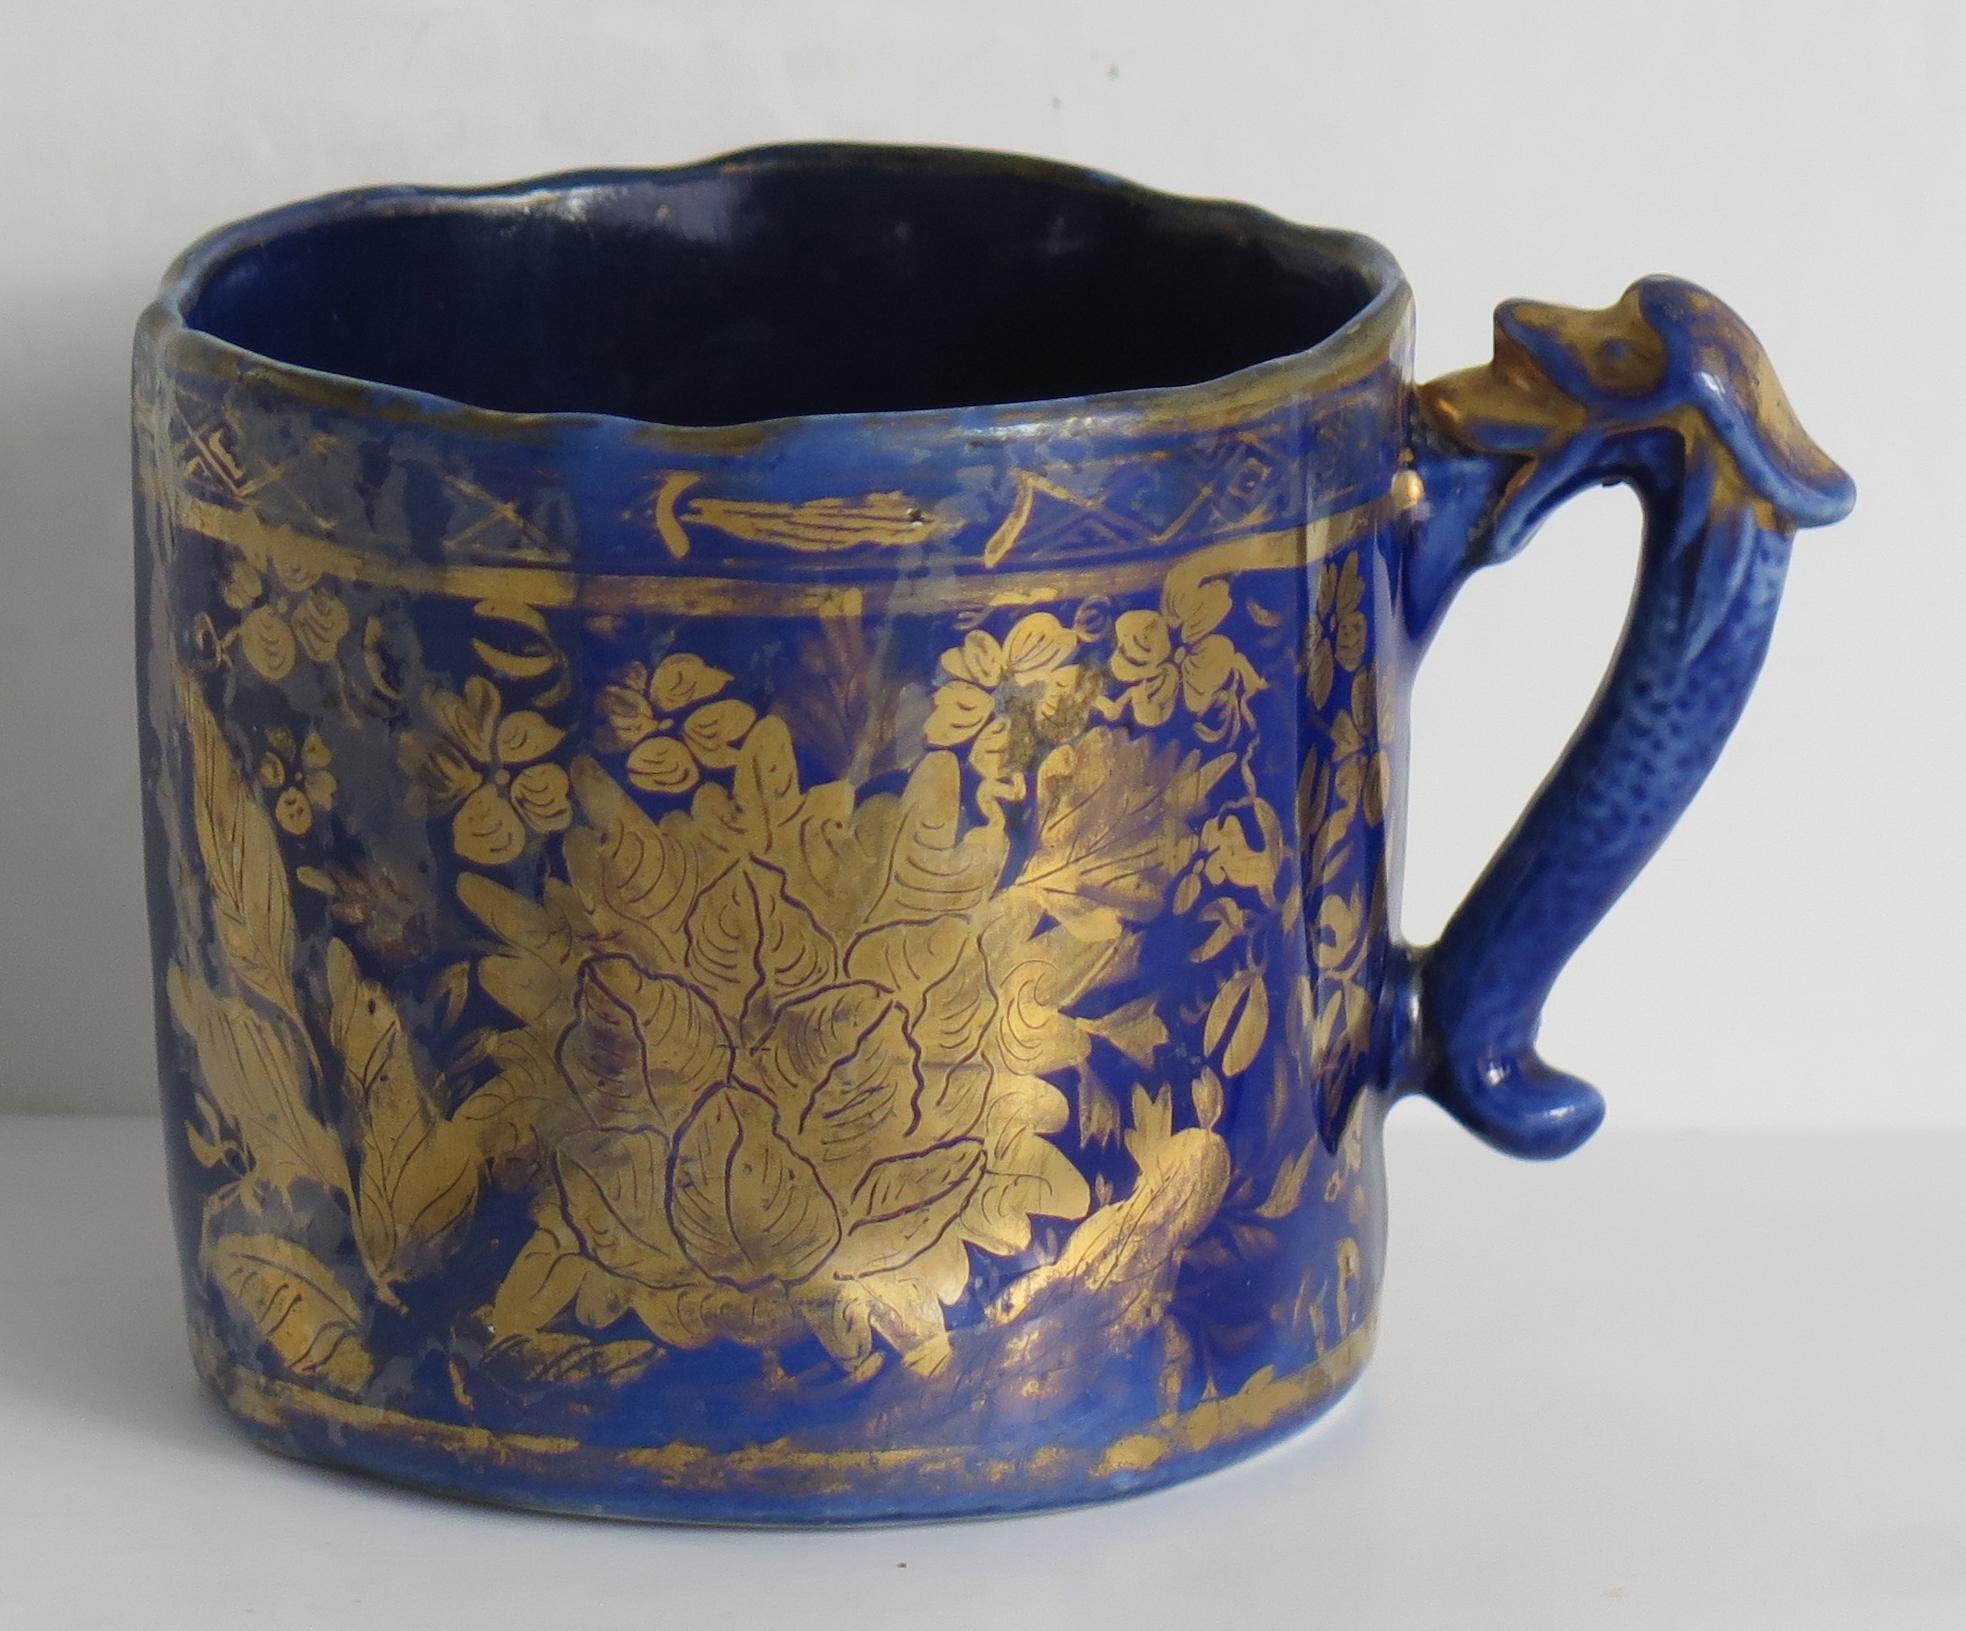 Chinoiserie Rare Early Mason's Ironstone Mug in Gold Posies & Butterflies pattern circa 1818